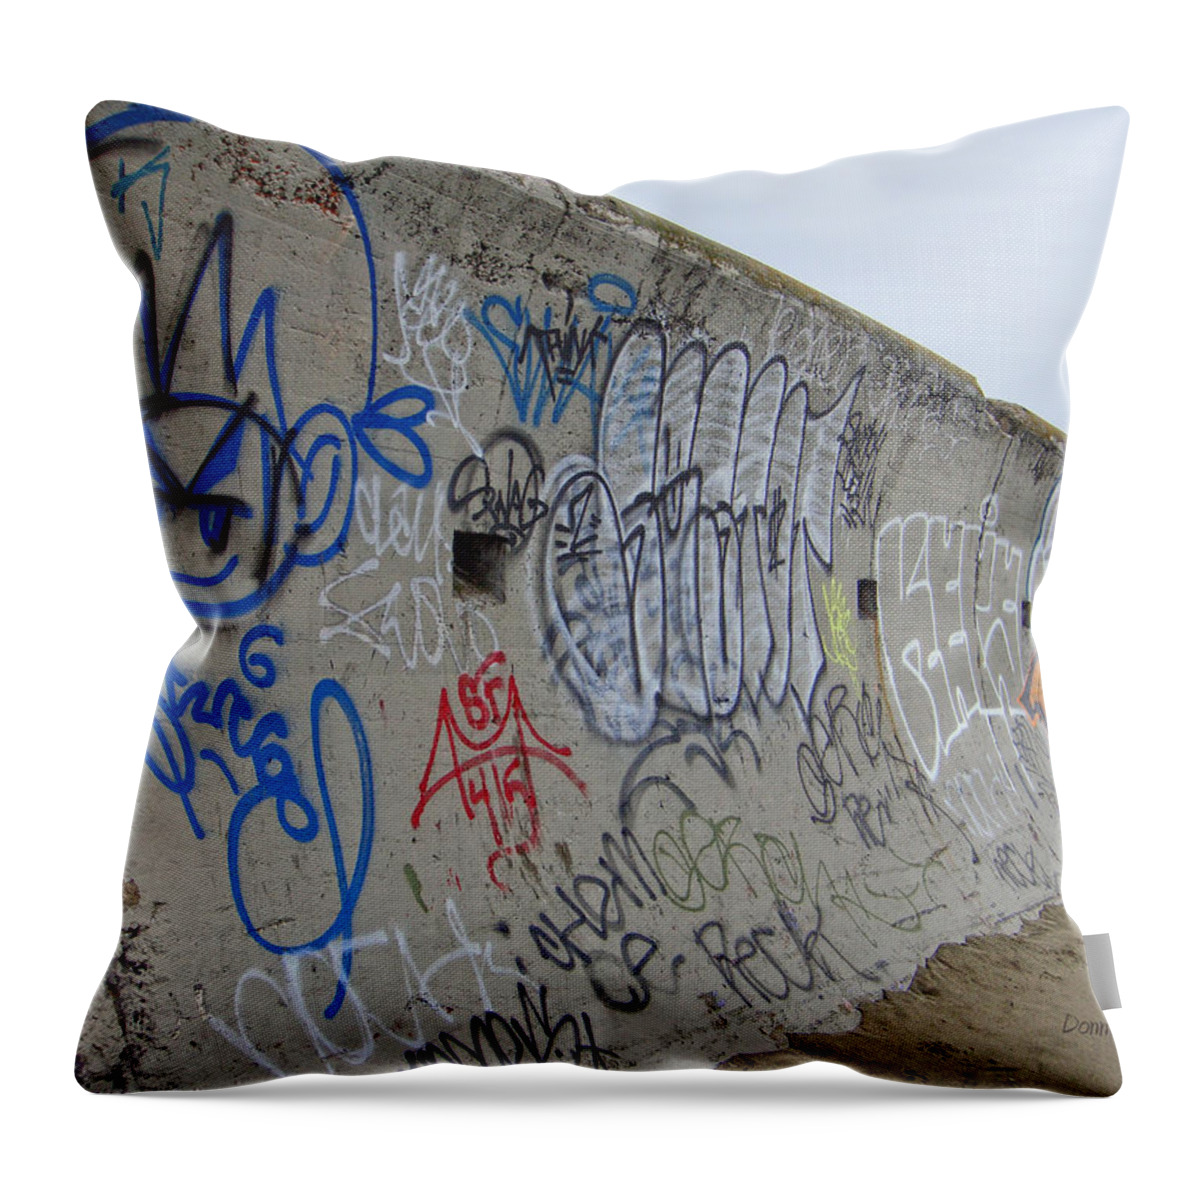 Graffiti Throw Pillow featuring the photograph Infinite Graffiti by Donna Blackhall